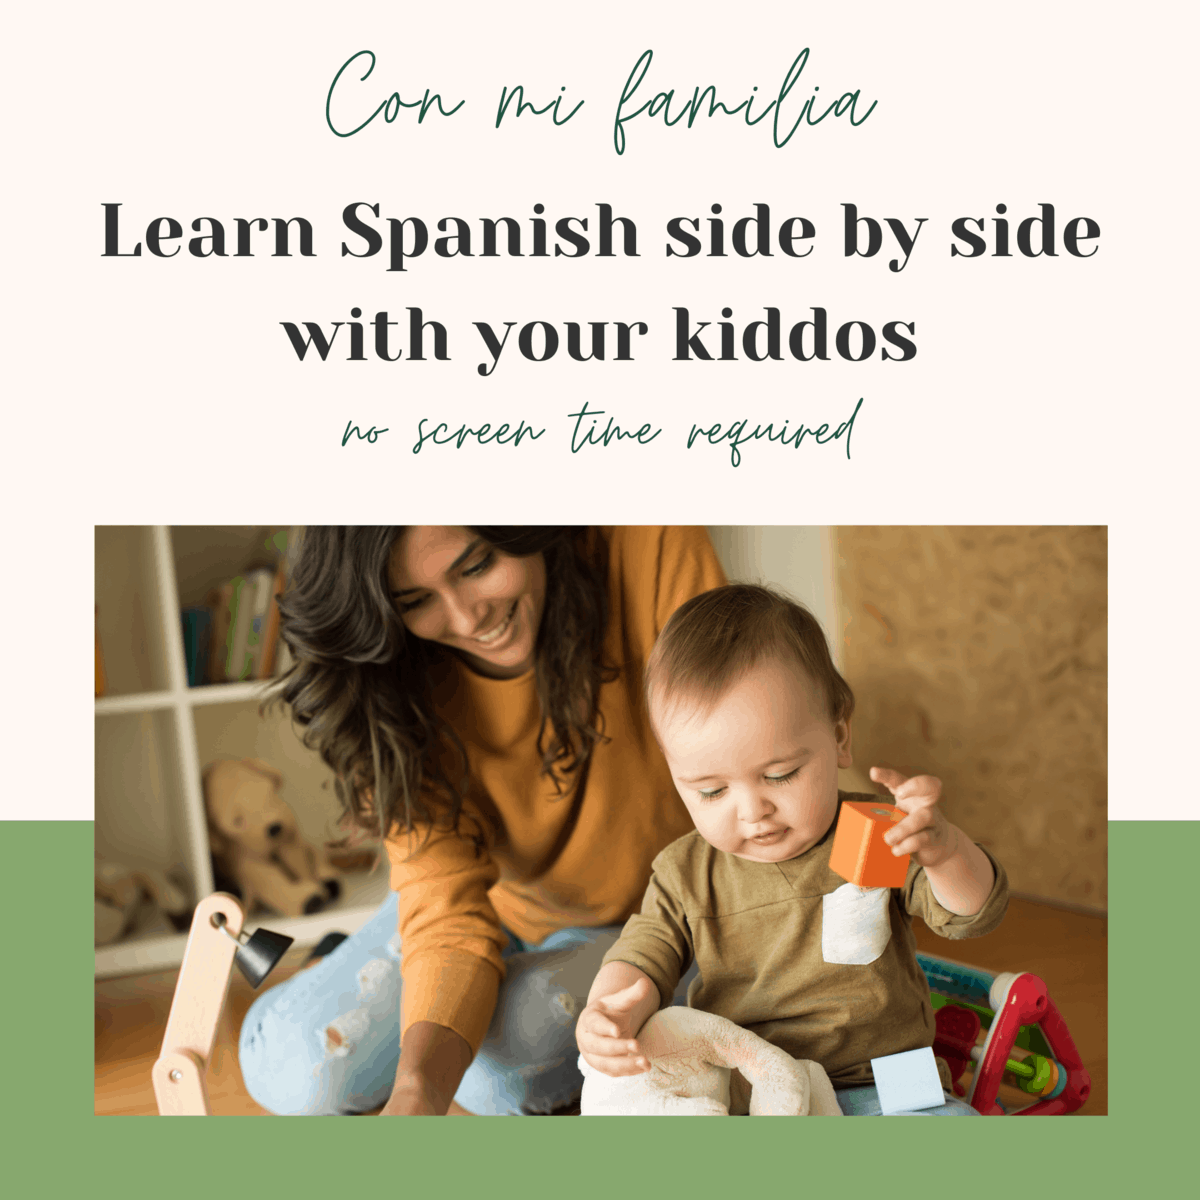 Con mi Familia - Spanish preschool course and curriculum